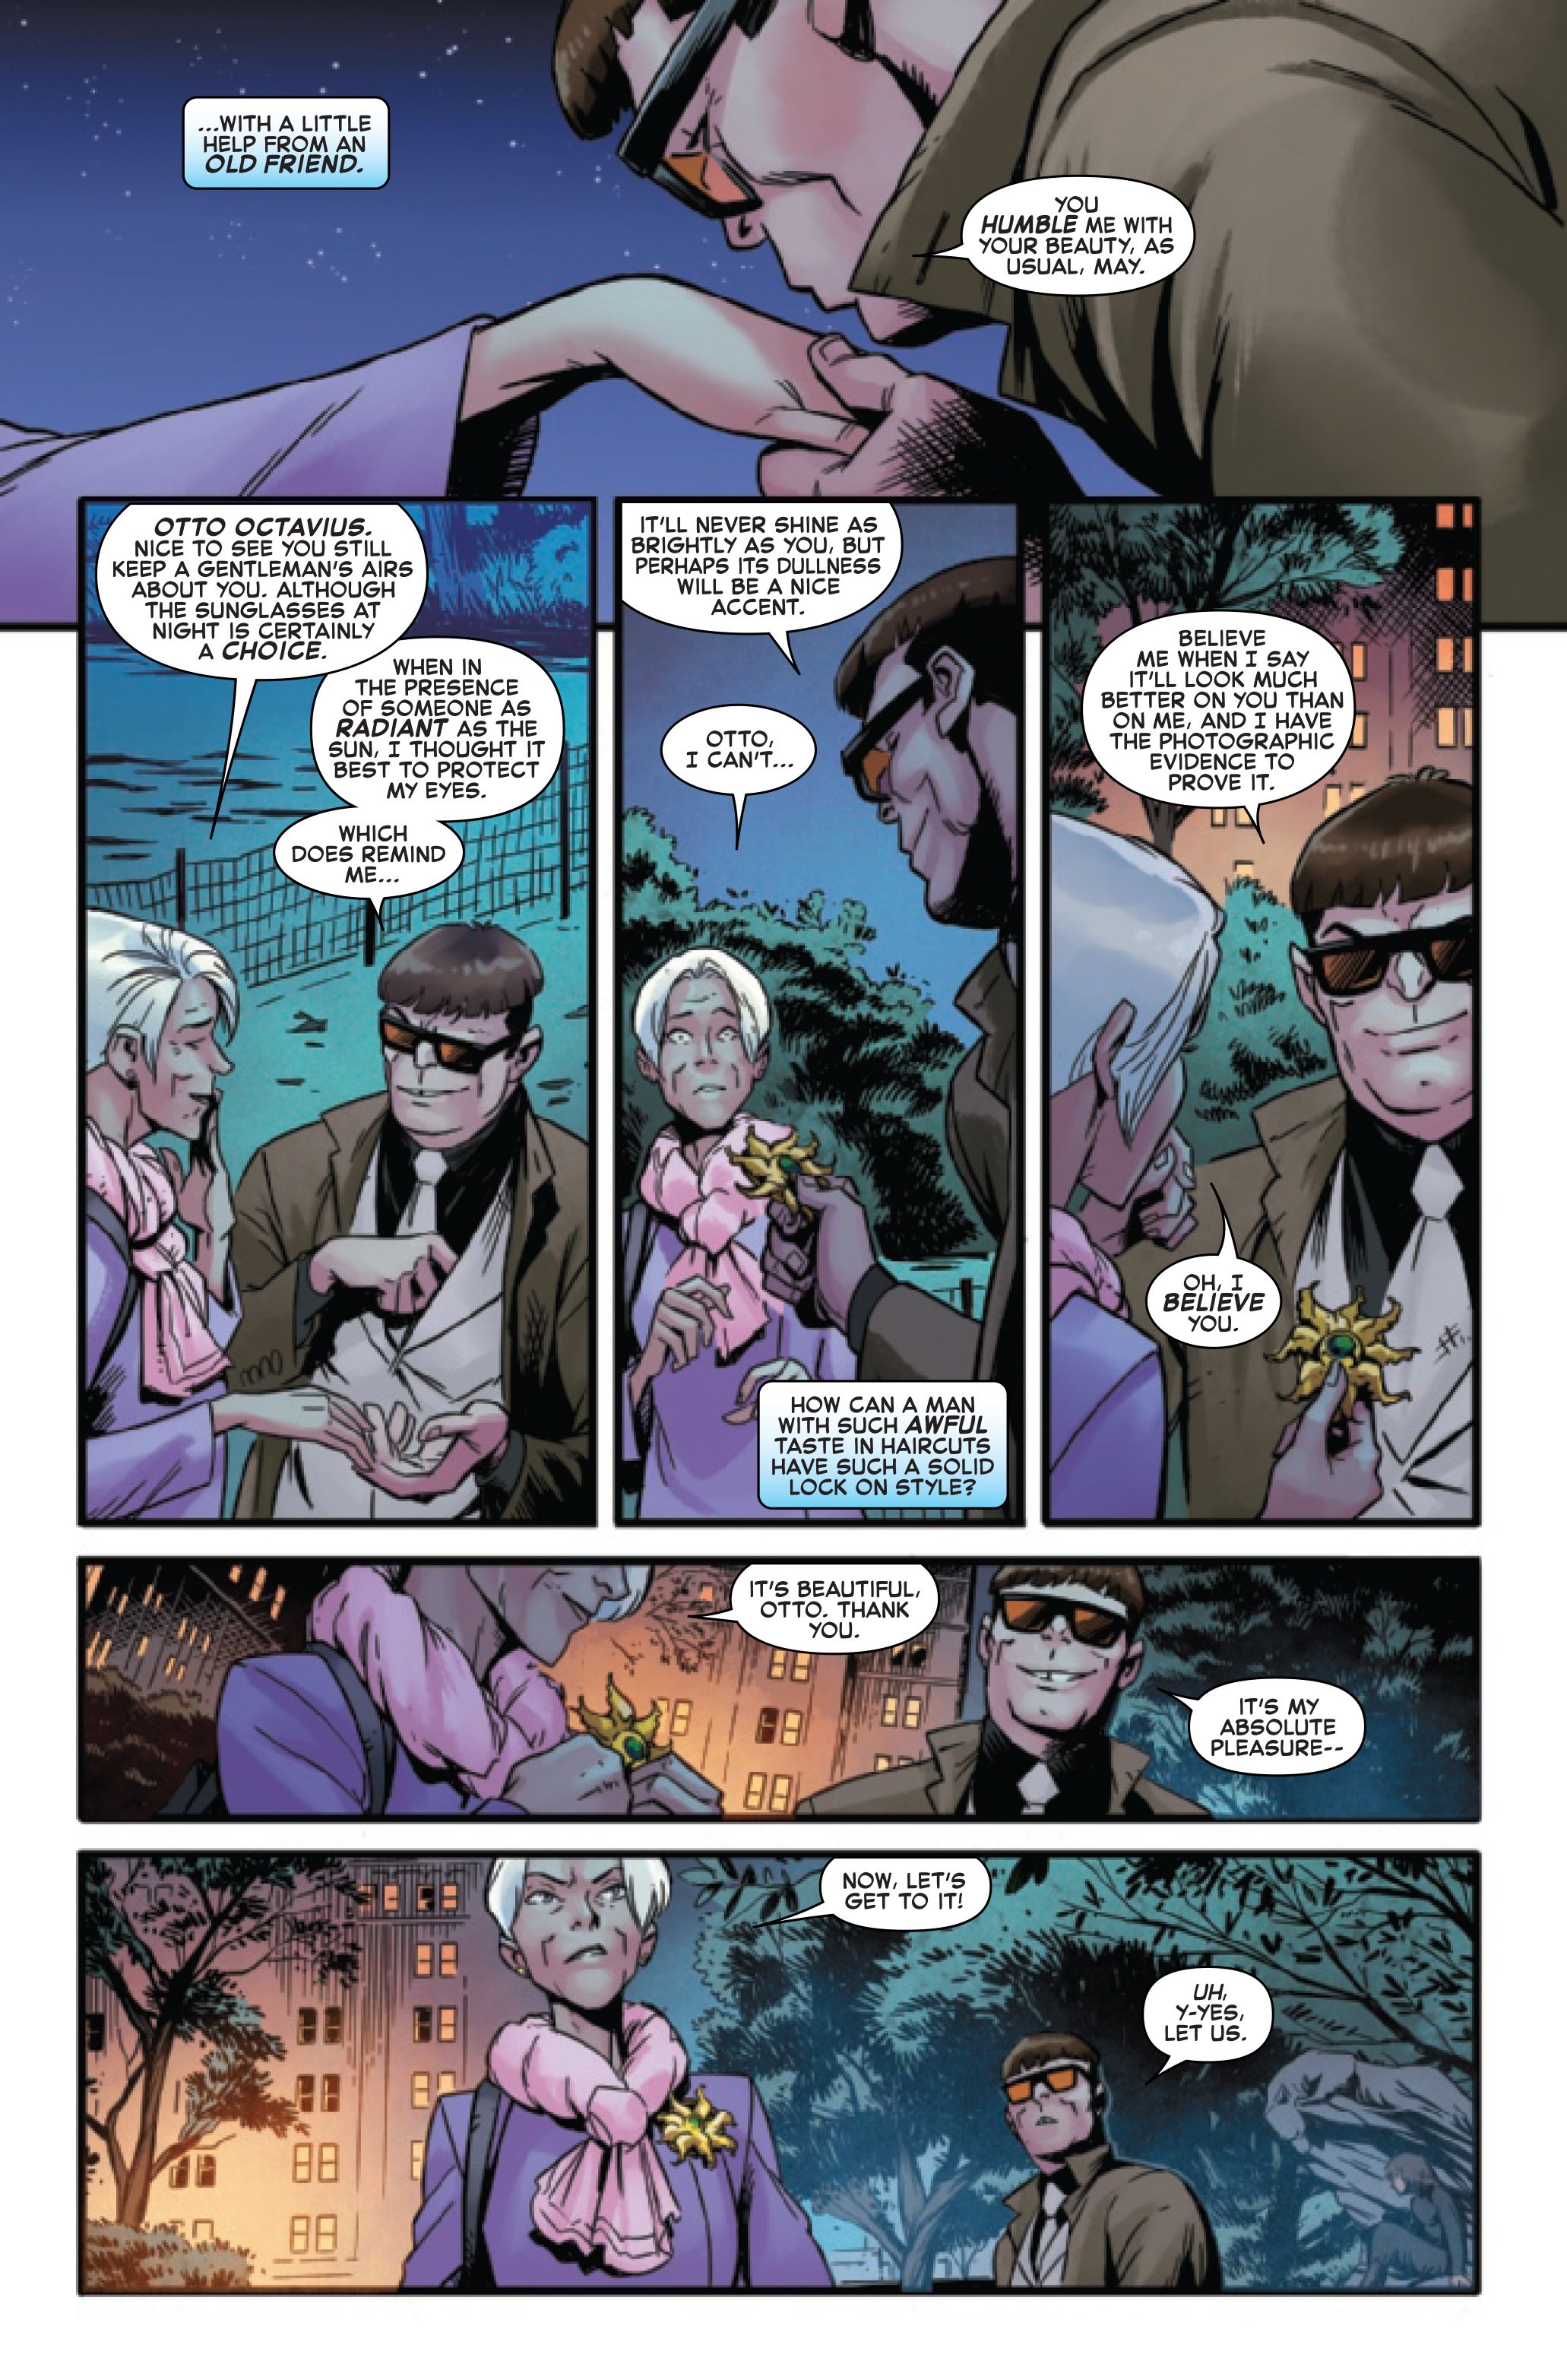 Page 3 of Amazing Spider-Man #80.BEY, by Cody Ziglar, Ivan Fiorelli, Carlos Gomez and Paco Medina.